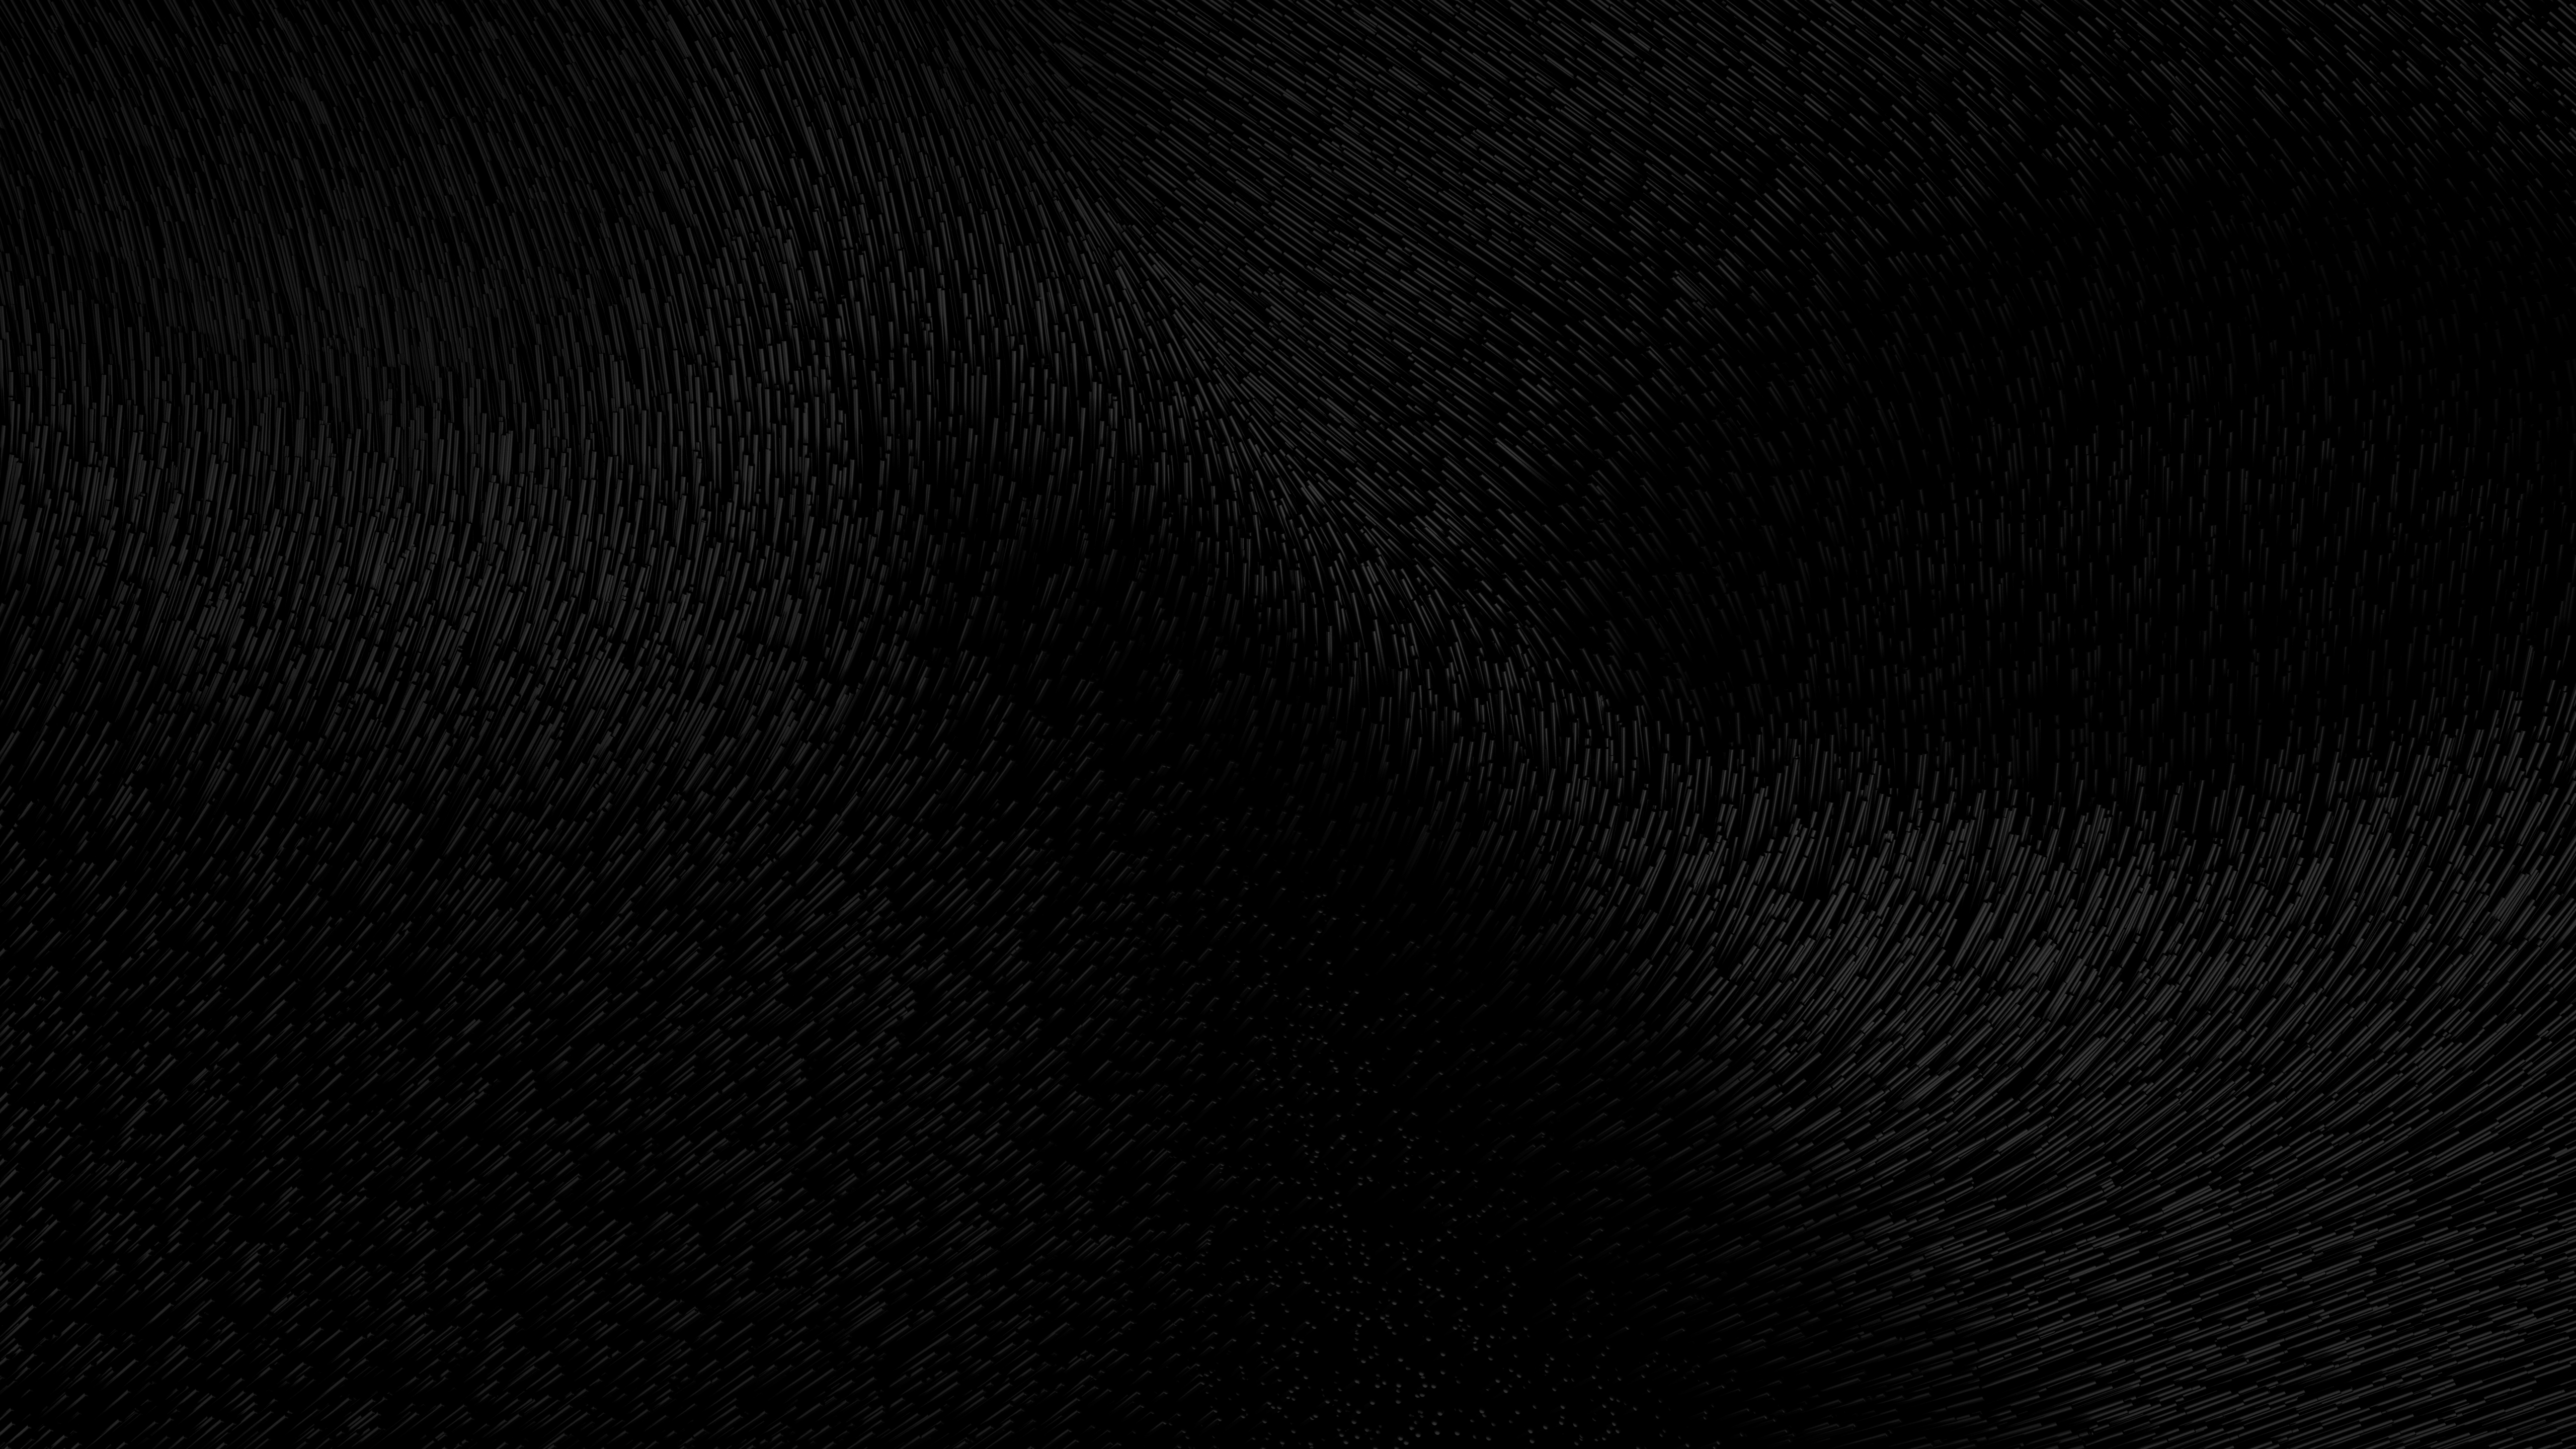 General 5120x2880 texture monochrome trails simple background abstract minimalism dark background black digital art